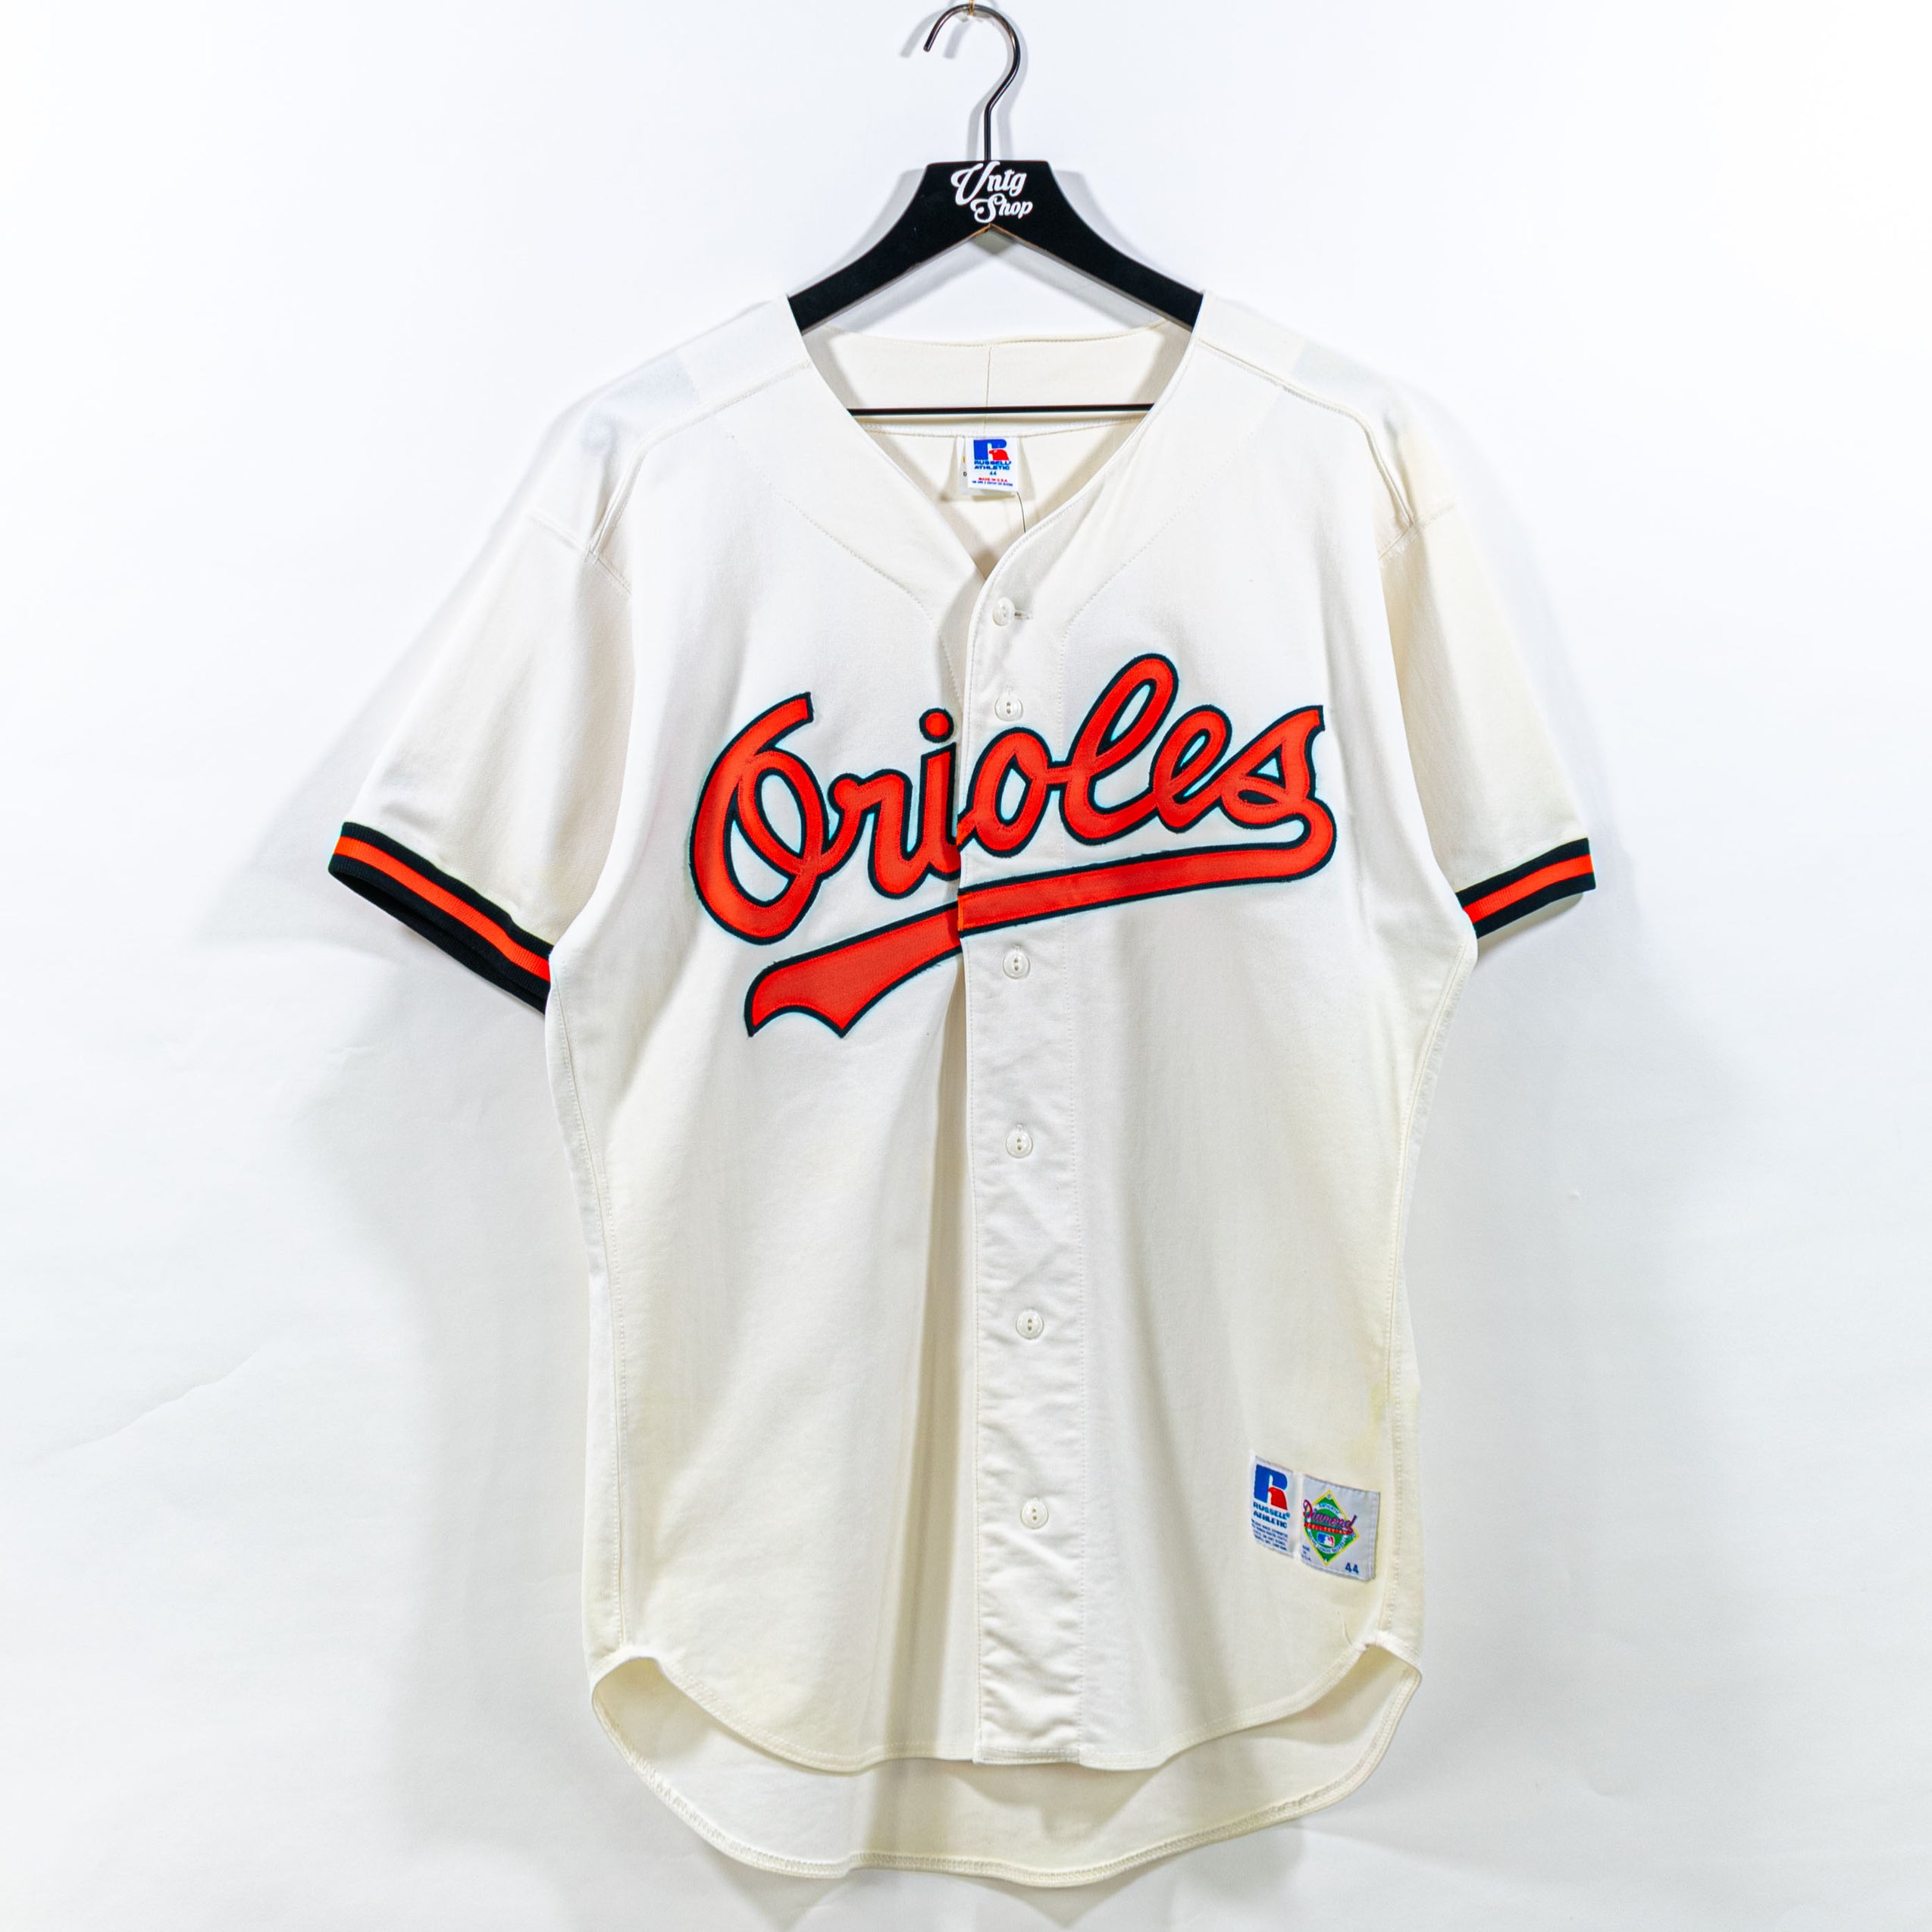 Vintage Orioles MLB Jersey 